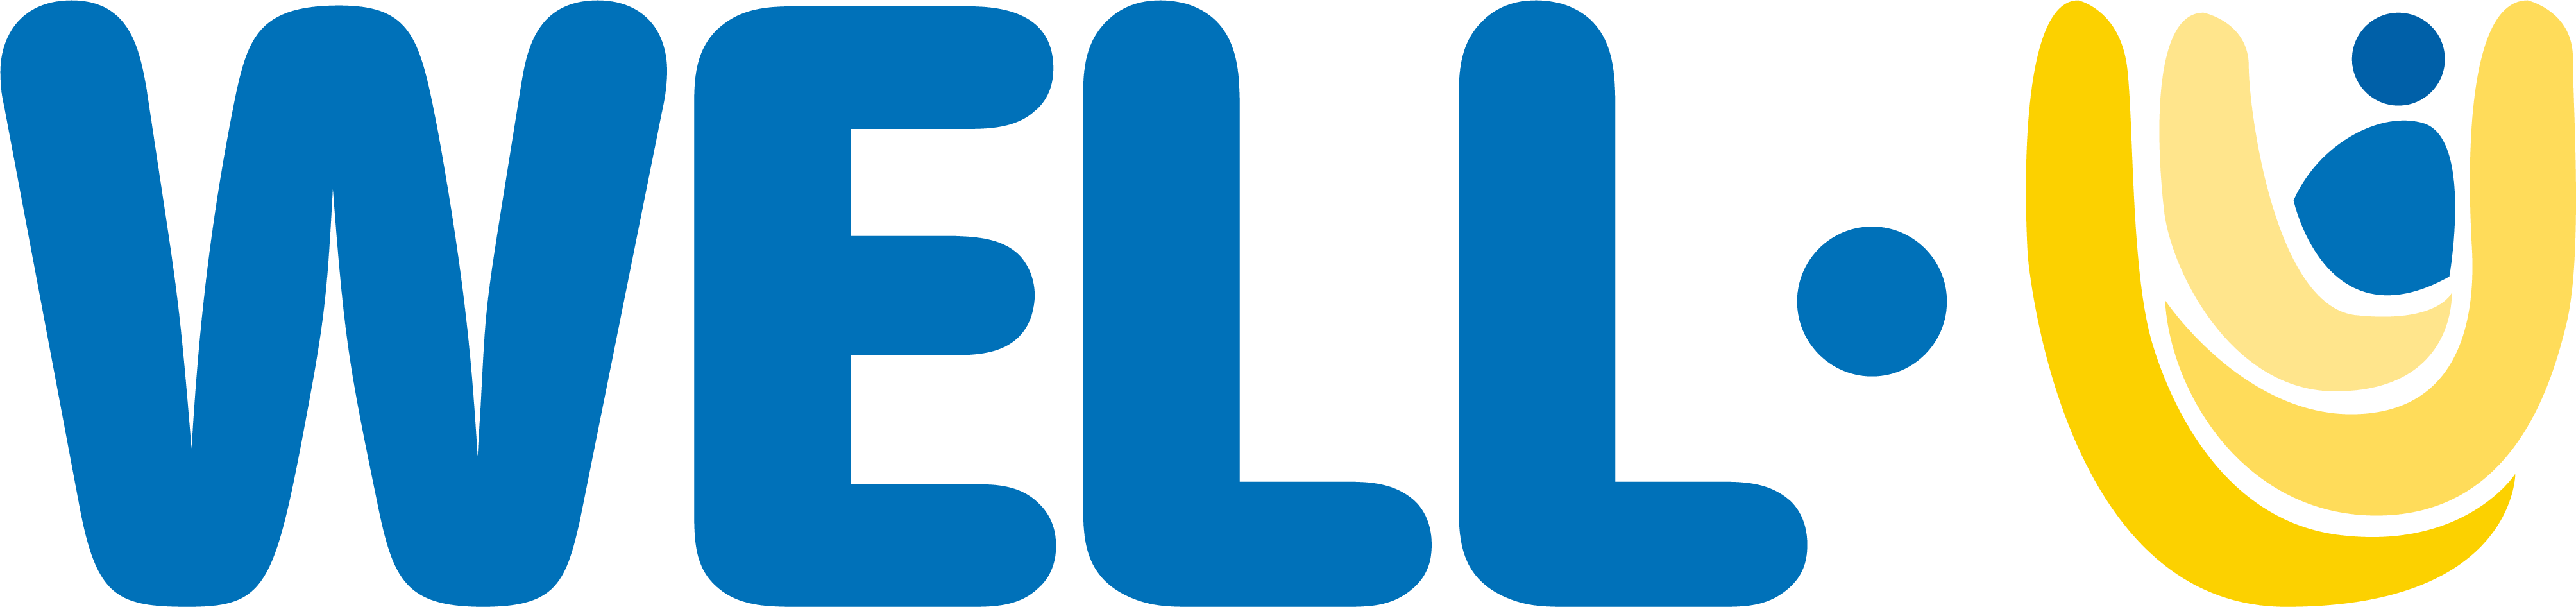 Well-U logo